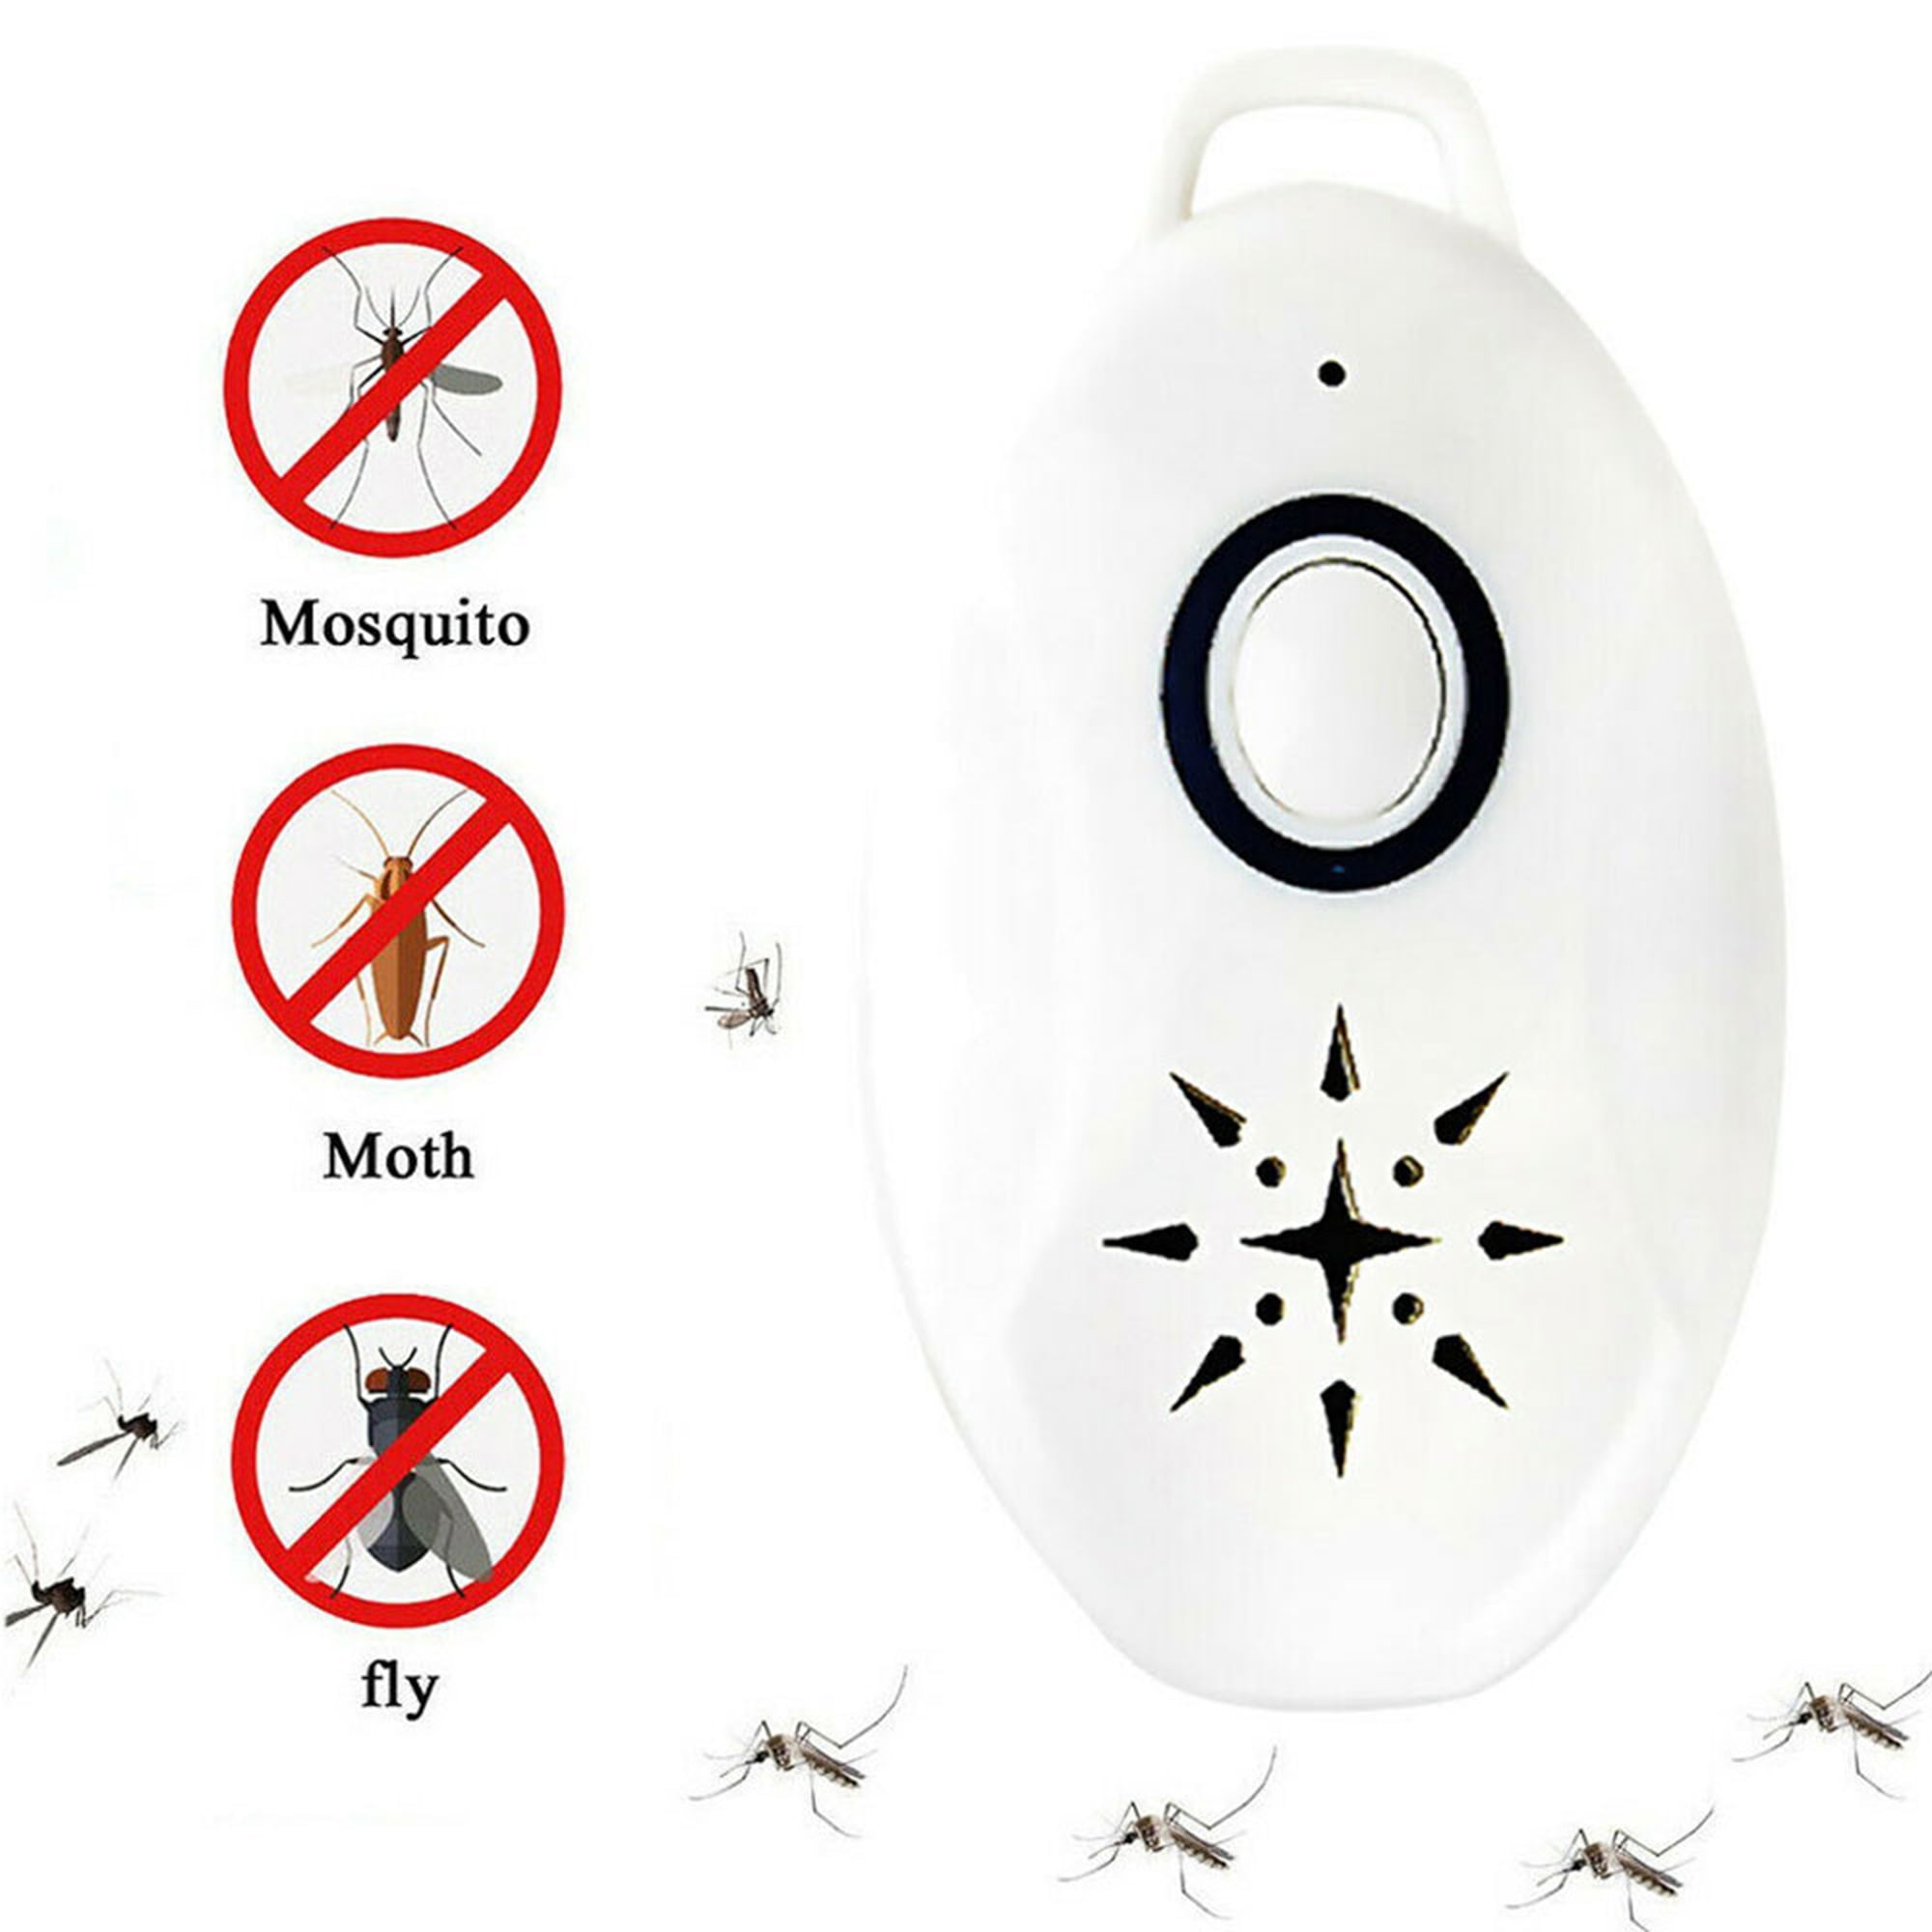 Flealess Ultrasonic Flea Tick Repeller Insect repellent Hot sale New 